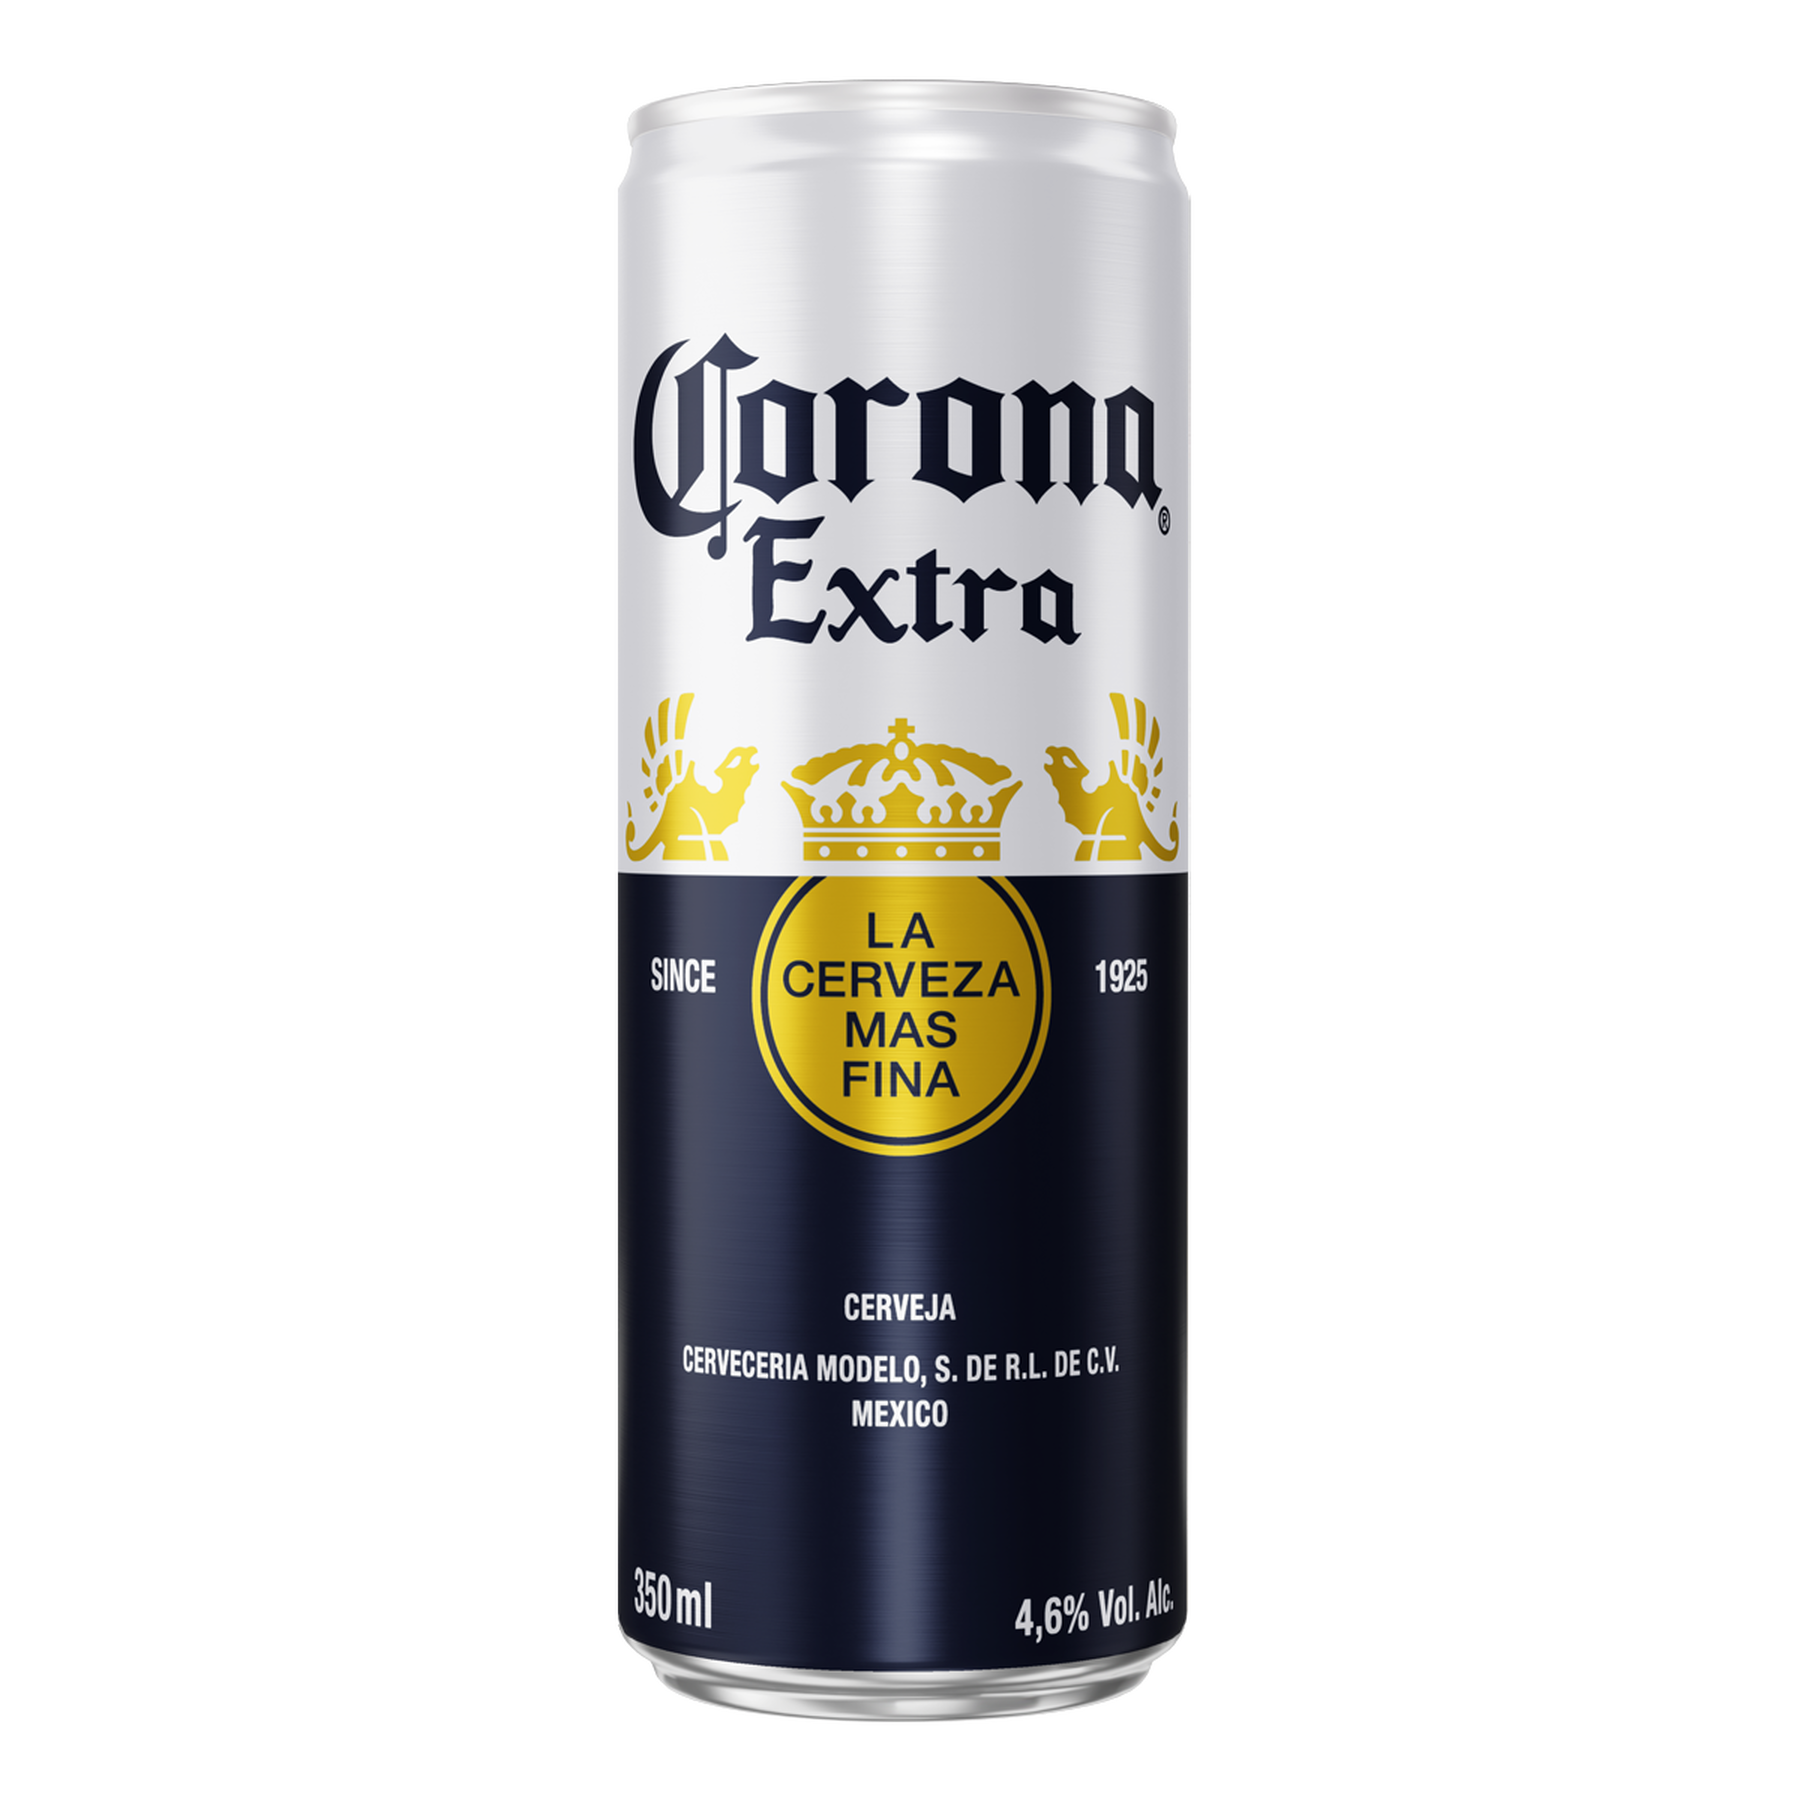 Cerveja Pilsen Corona Extra Lata 350ml